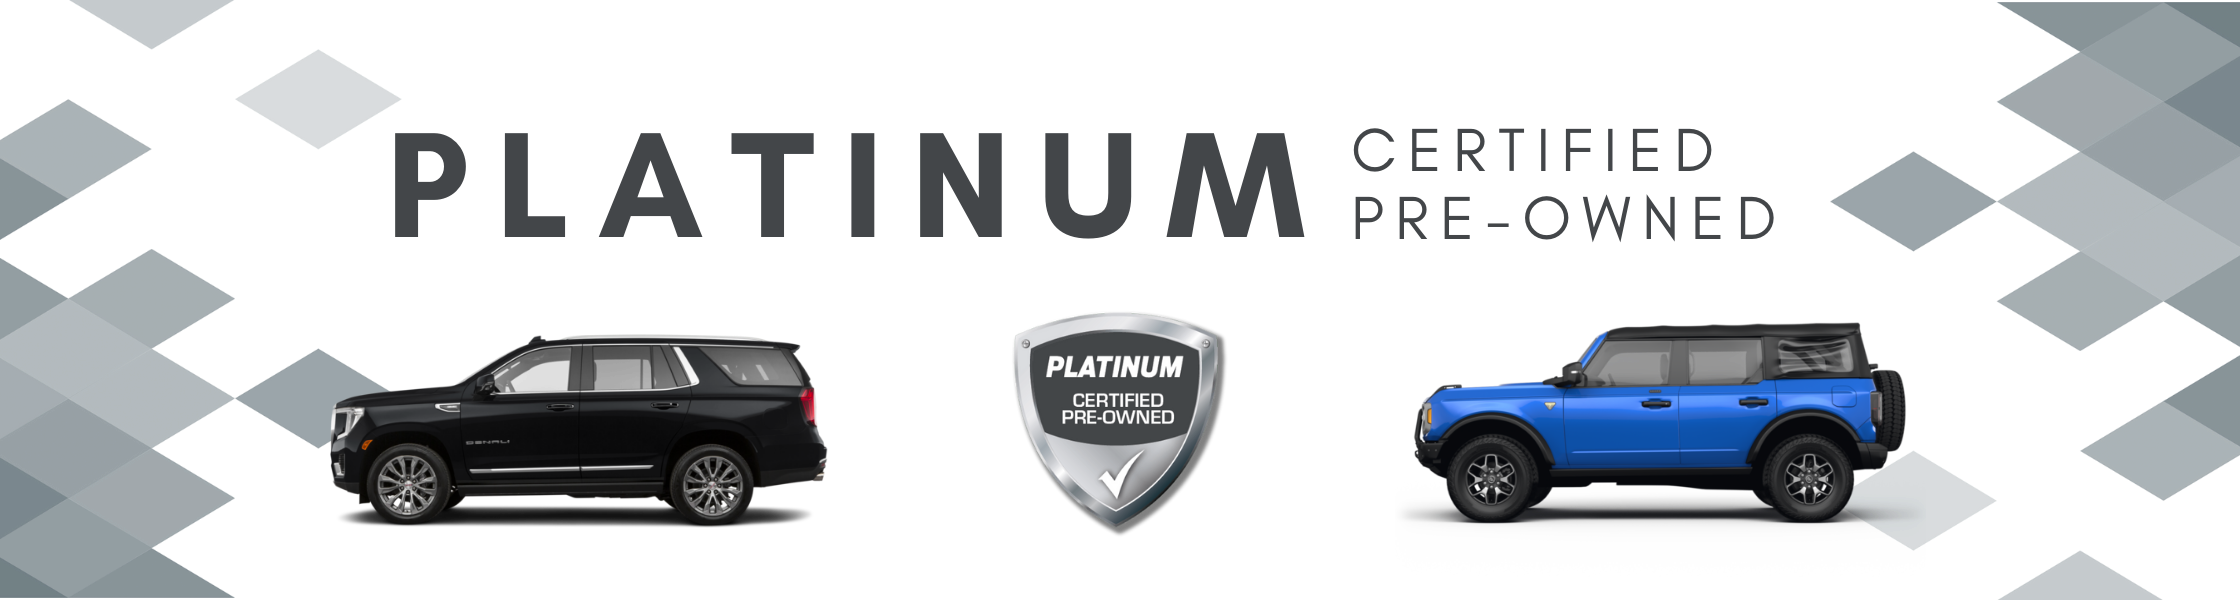 Platinum-Certified-Banner-AutoIQ